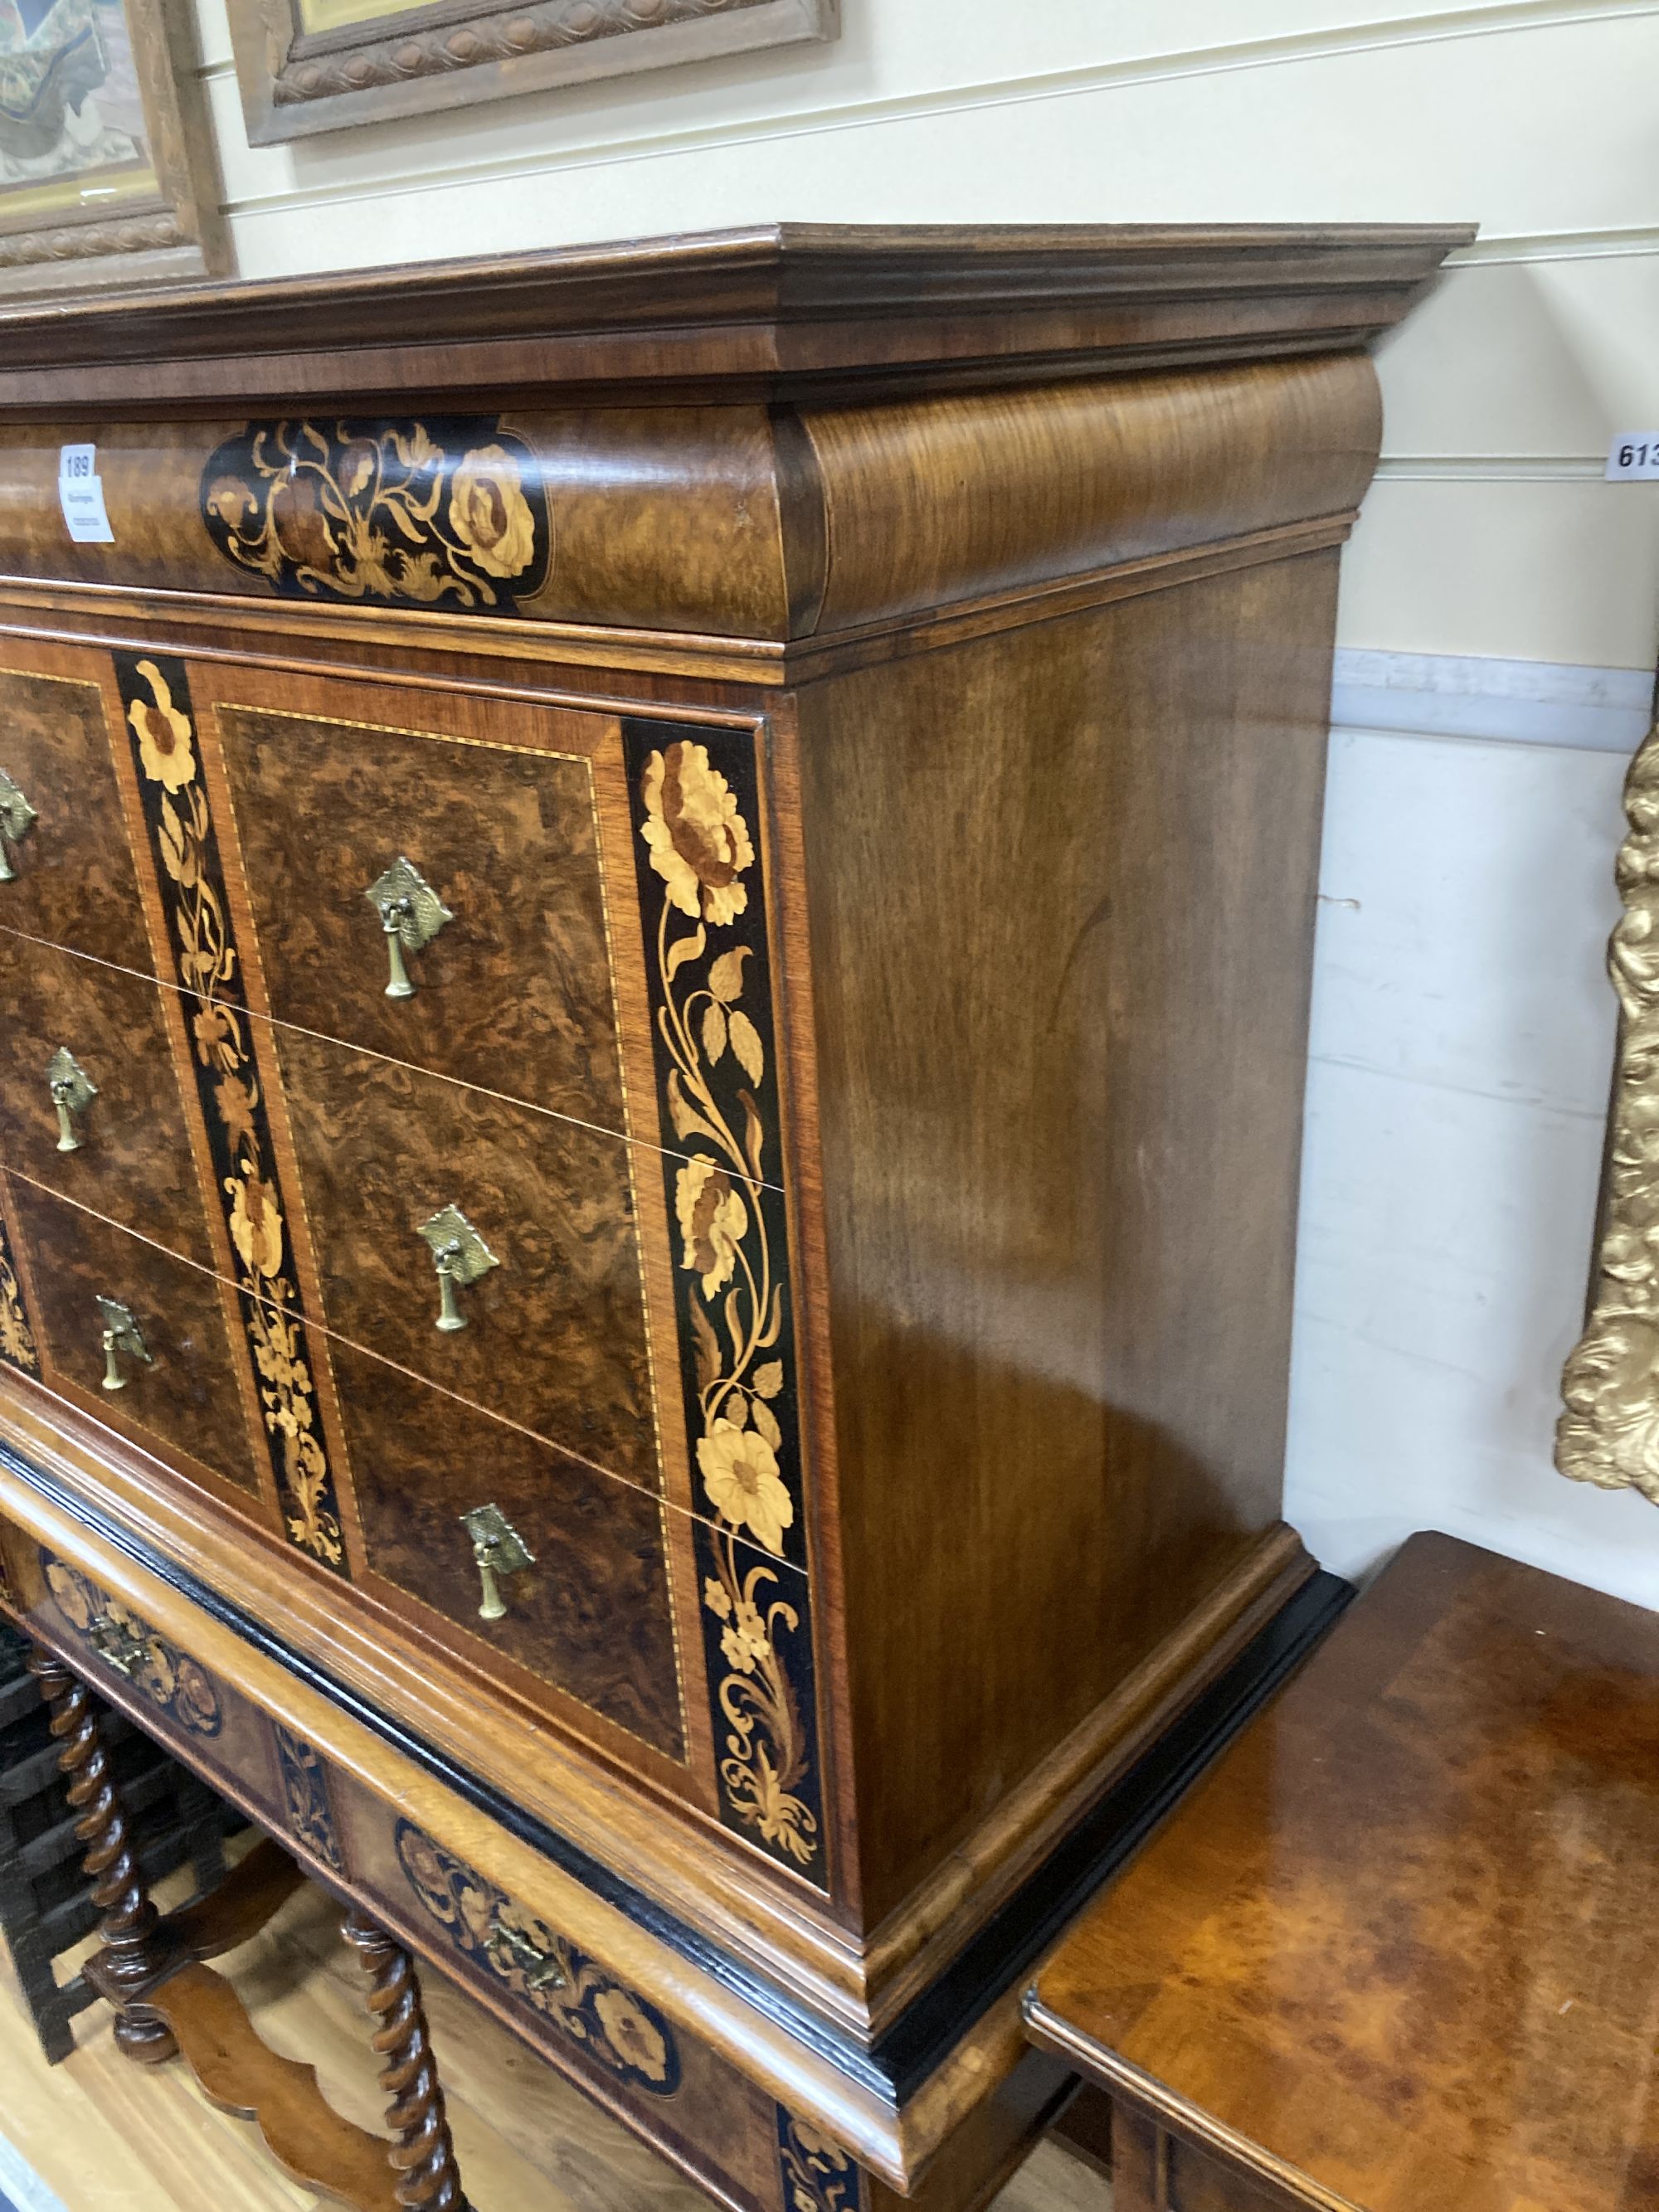 An 18th century style Dutch marquetry inlaid burr walnut chest on stand, width 108cm, depth 51cm, height 153cm